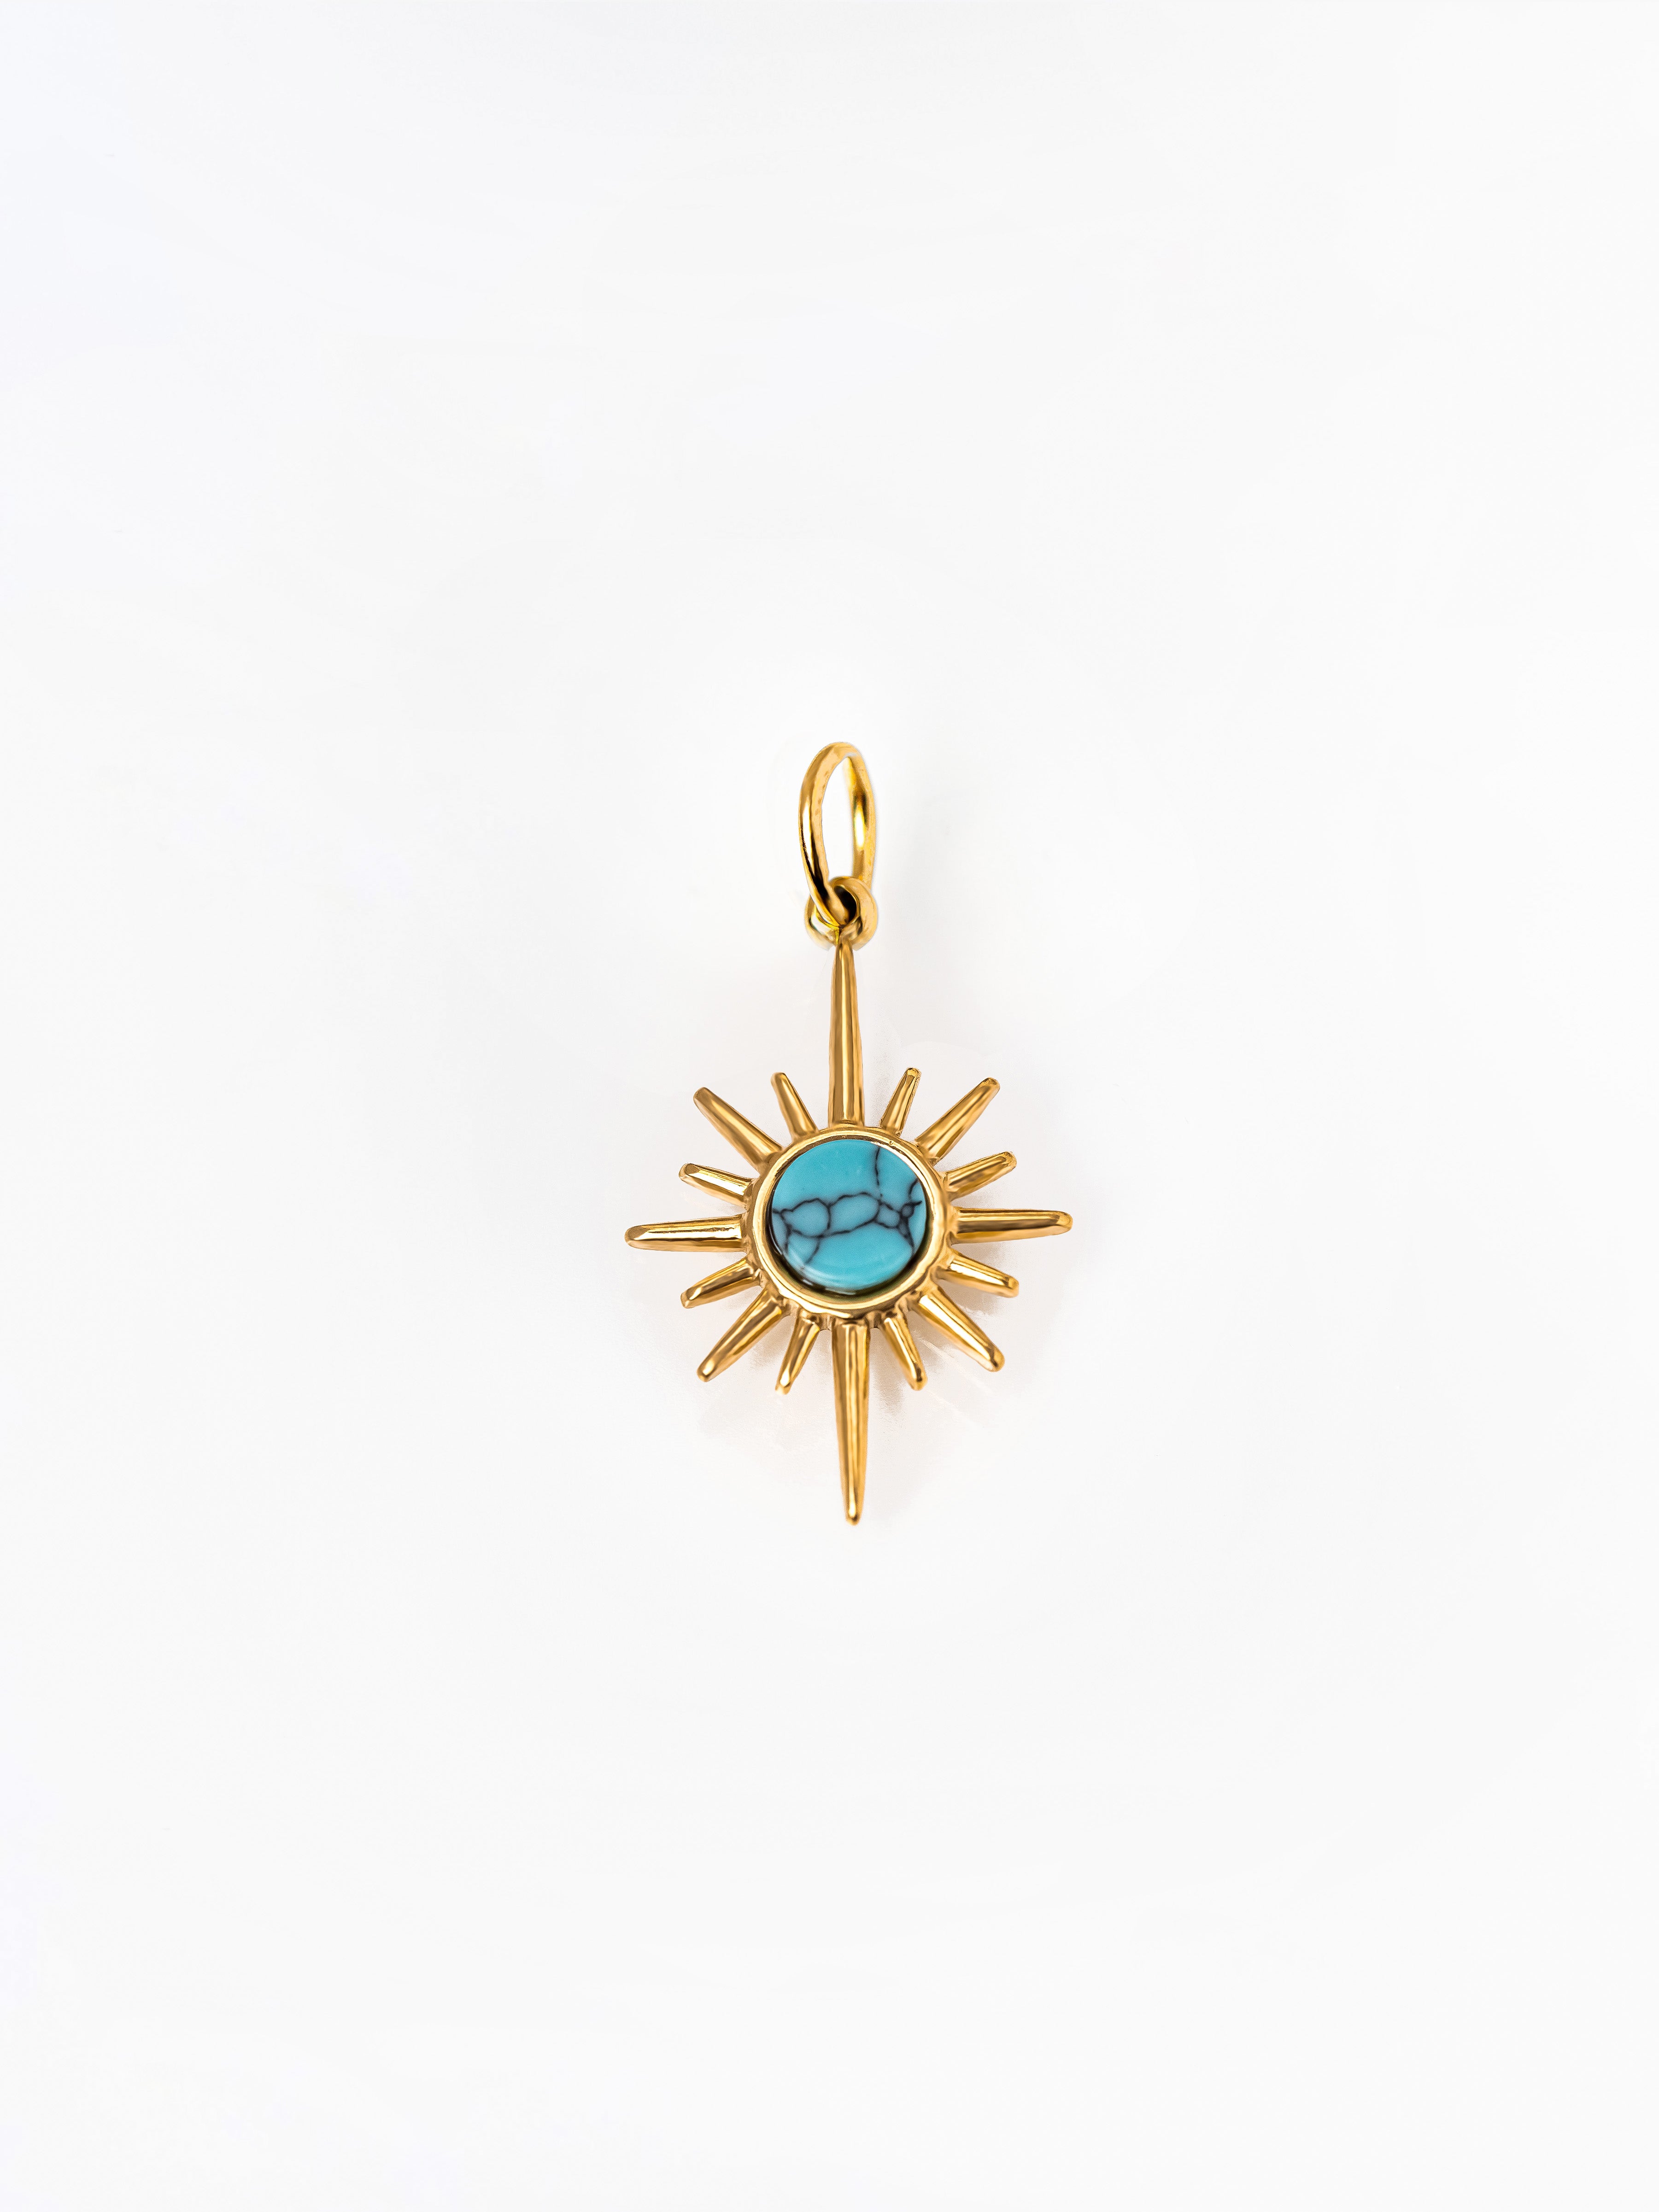 Gold Sunburst Star Pendant / Charm With Turquoise Stone